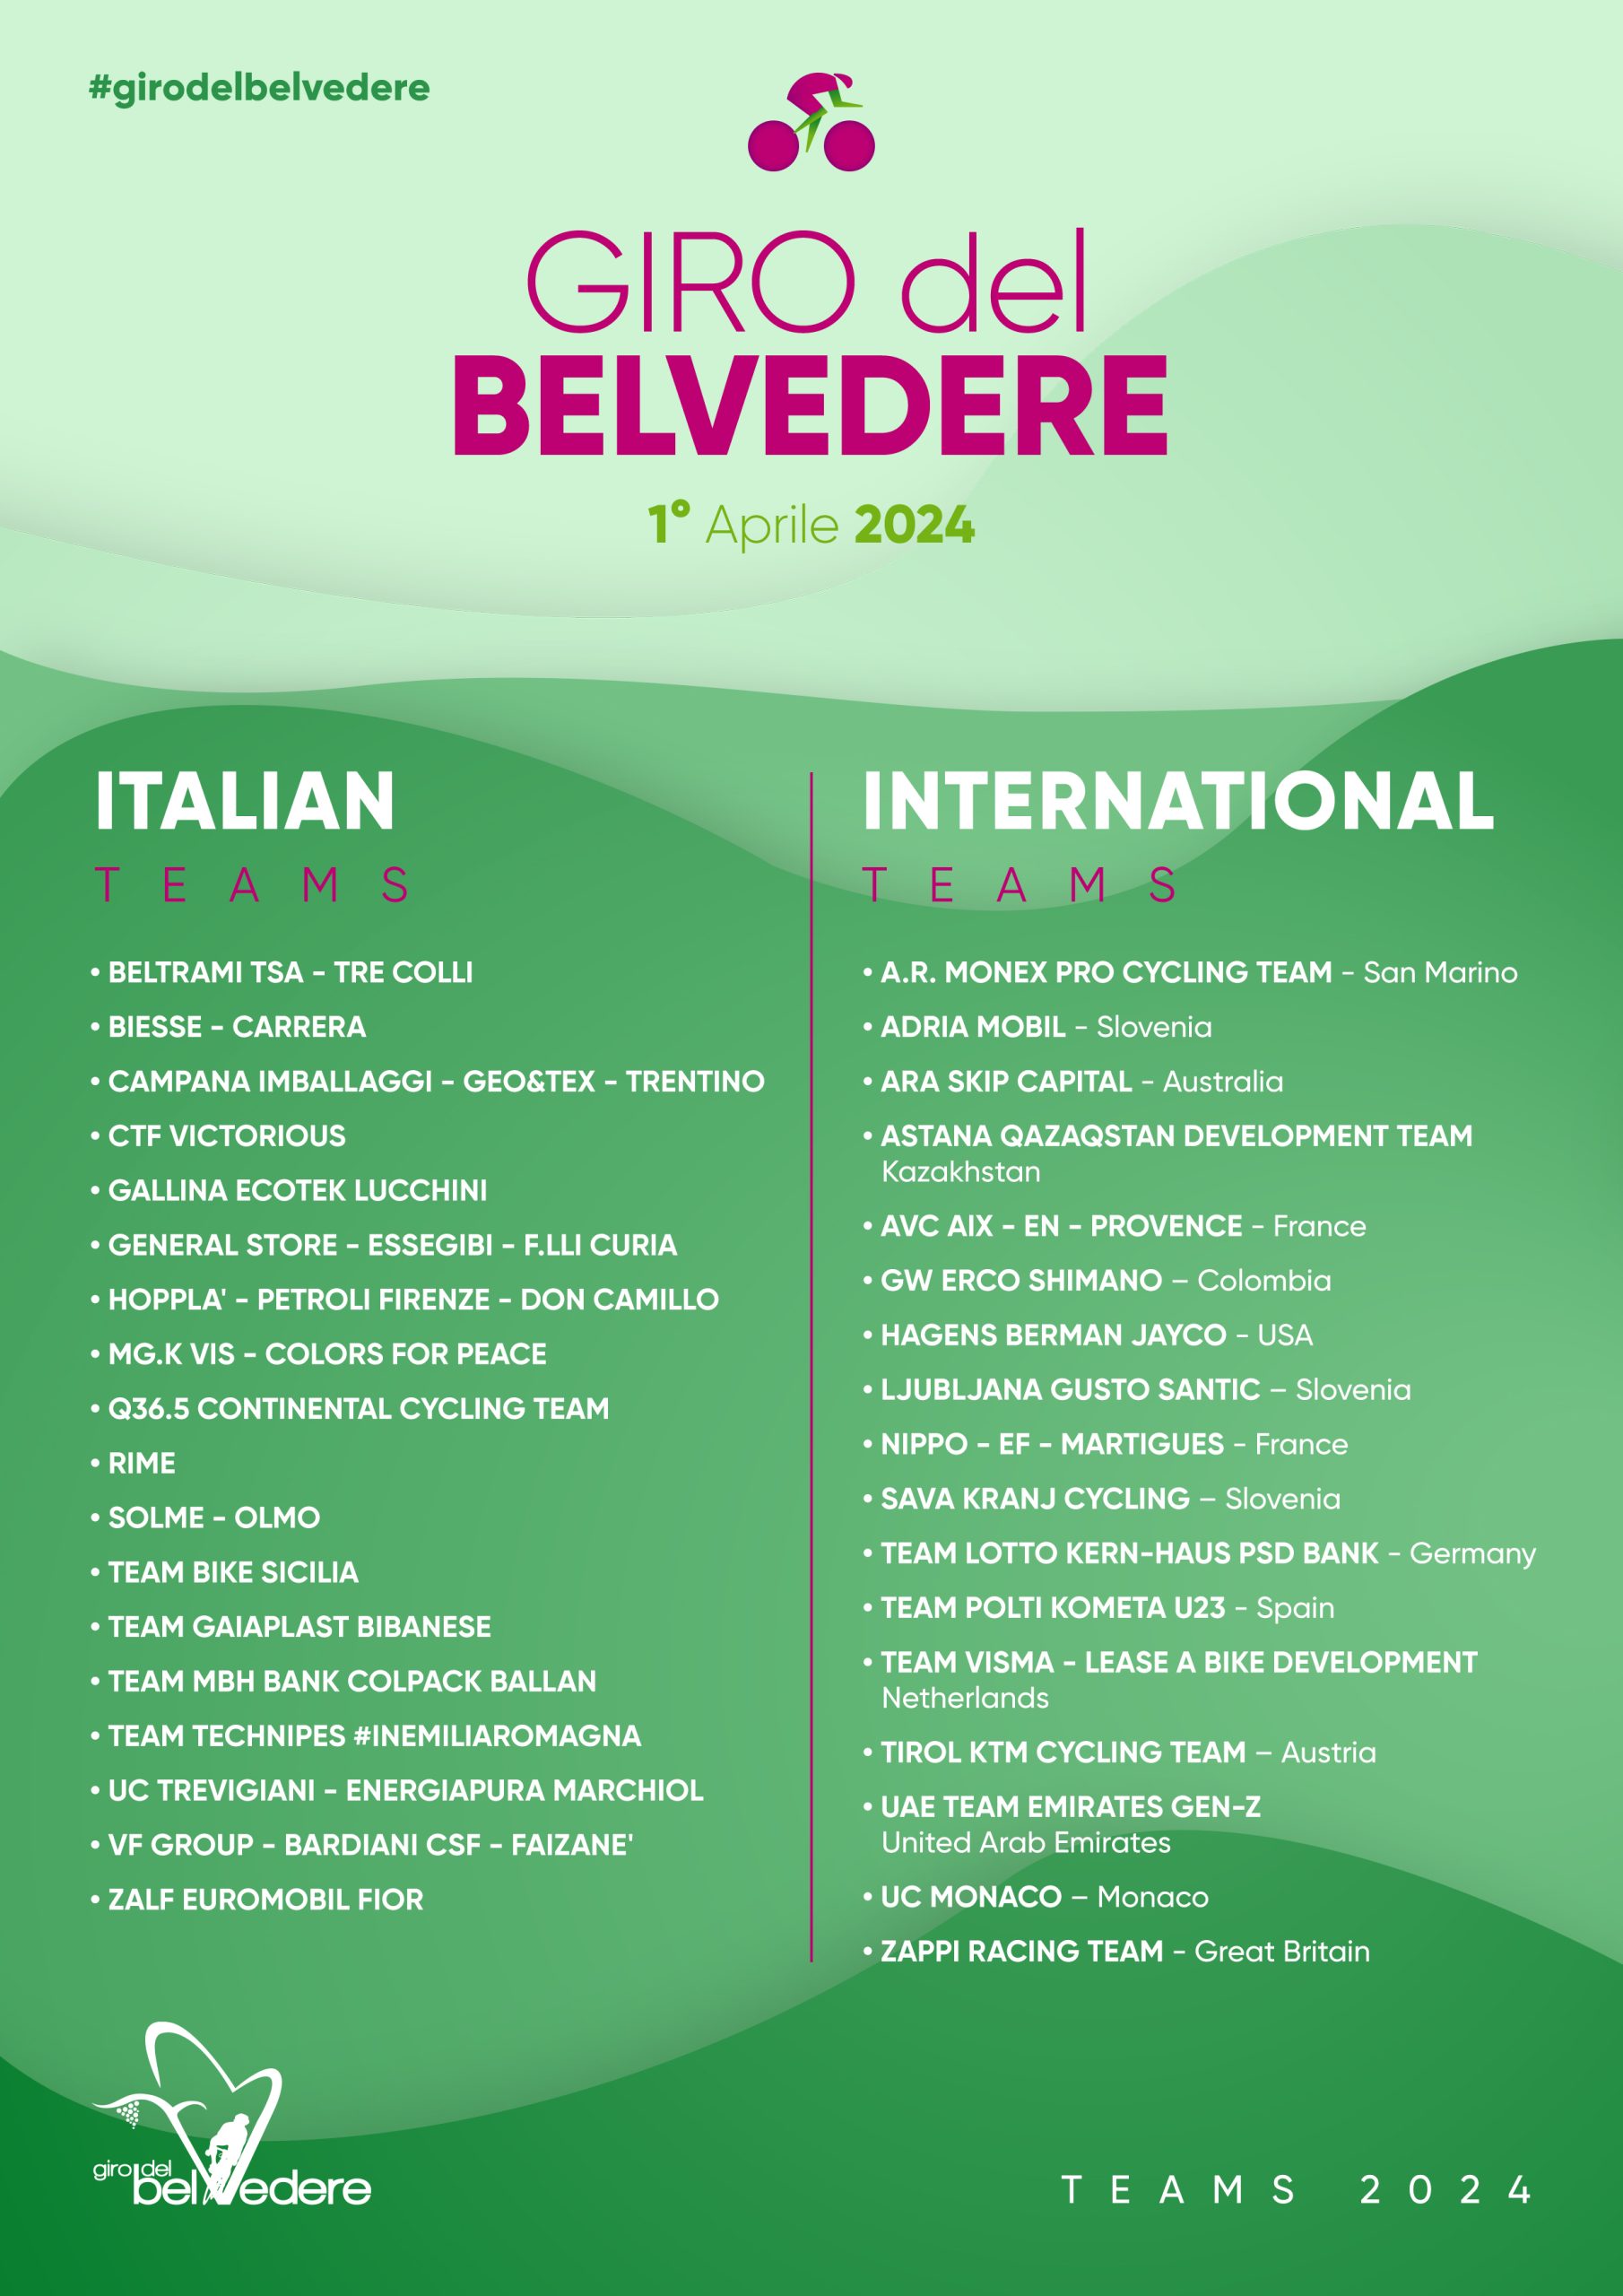 Giro del Belvedere - Teams